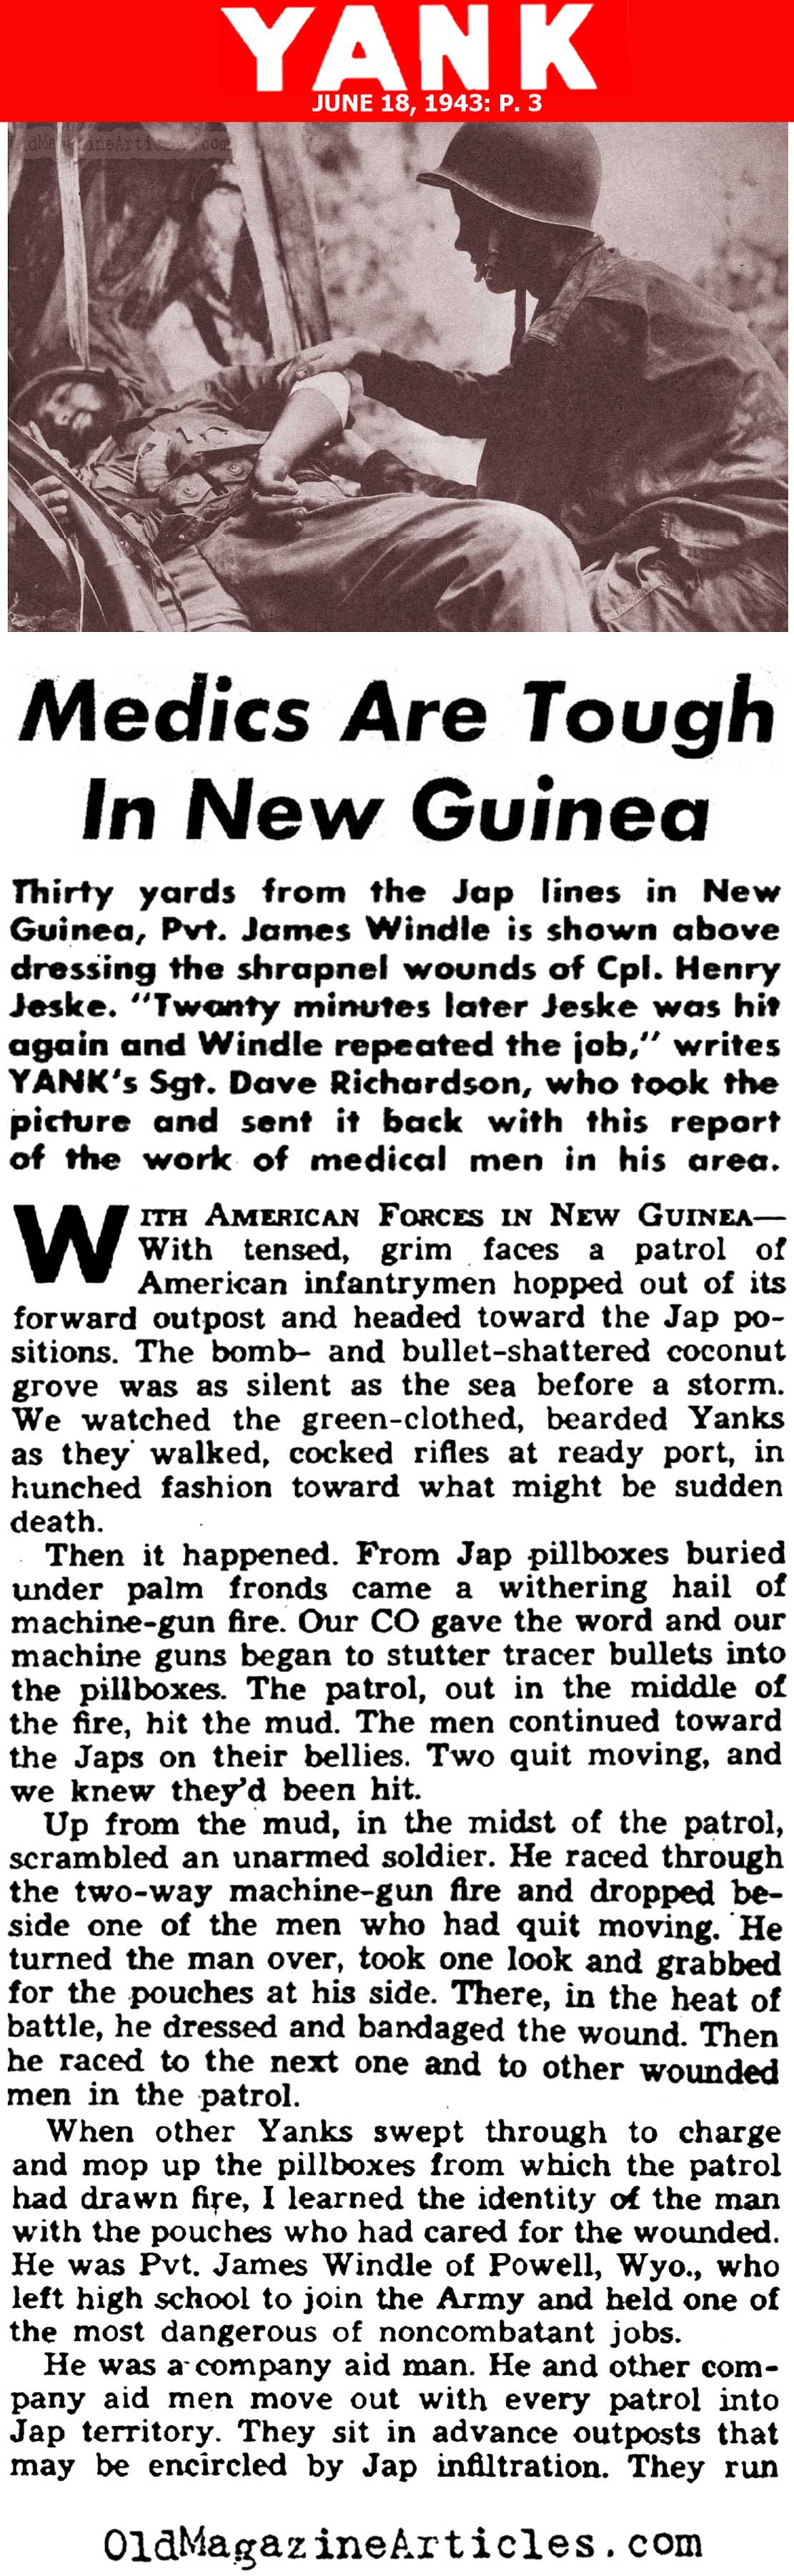 Army Medics on New Guinea (Yank Magazine, 1943)